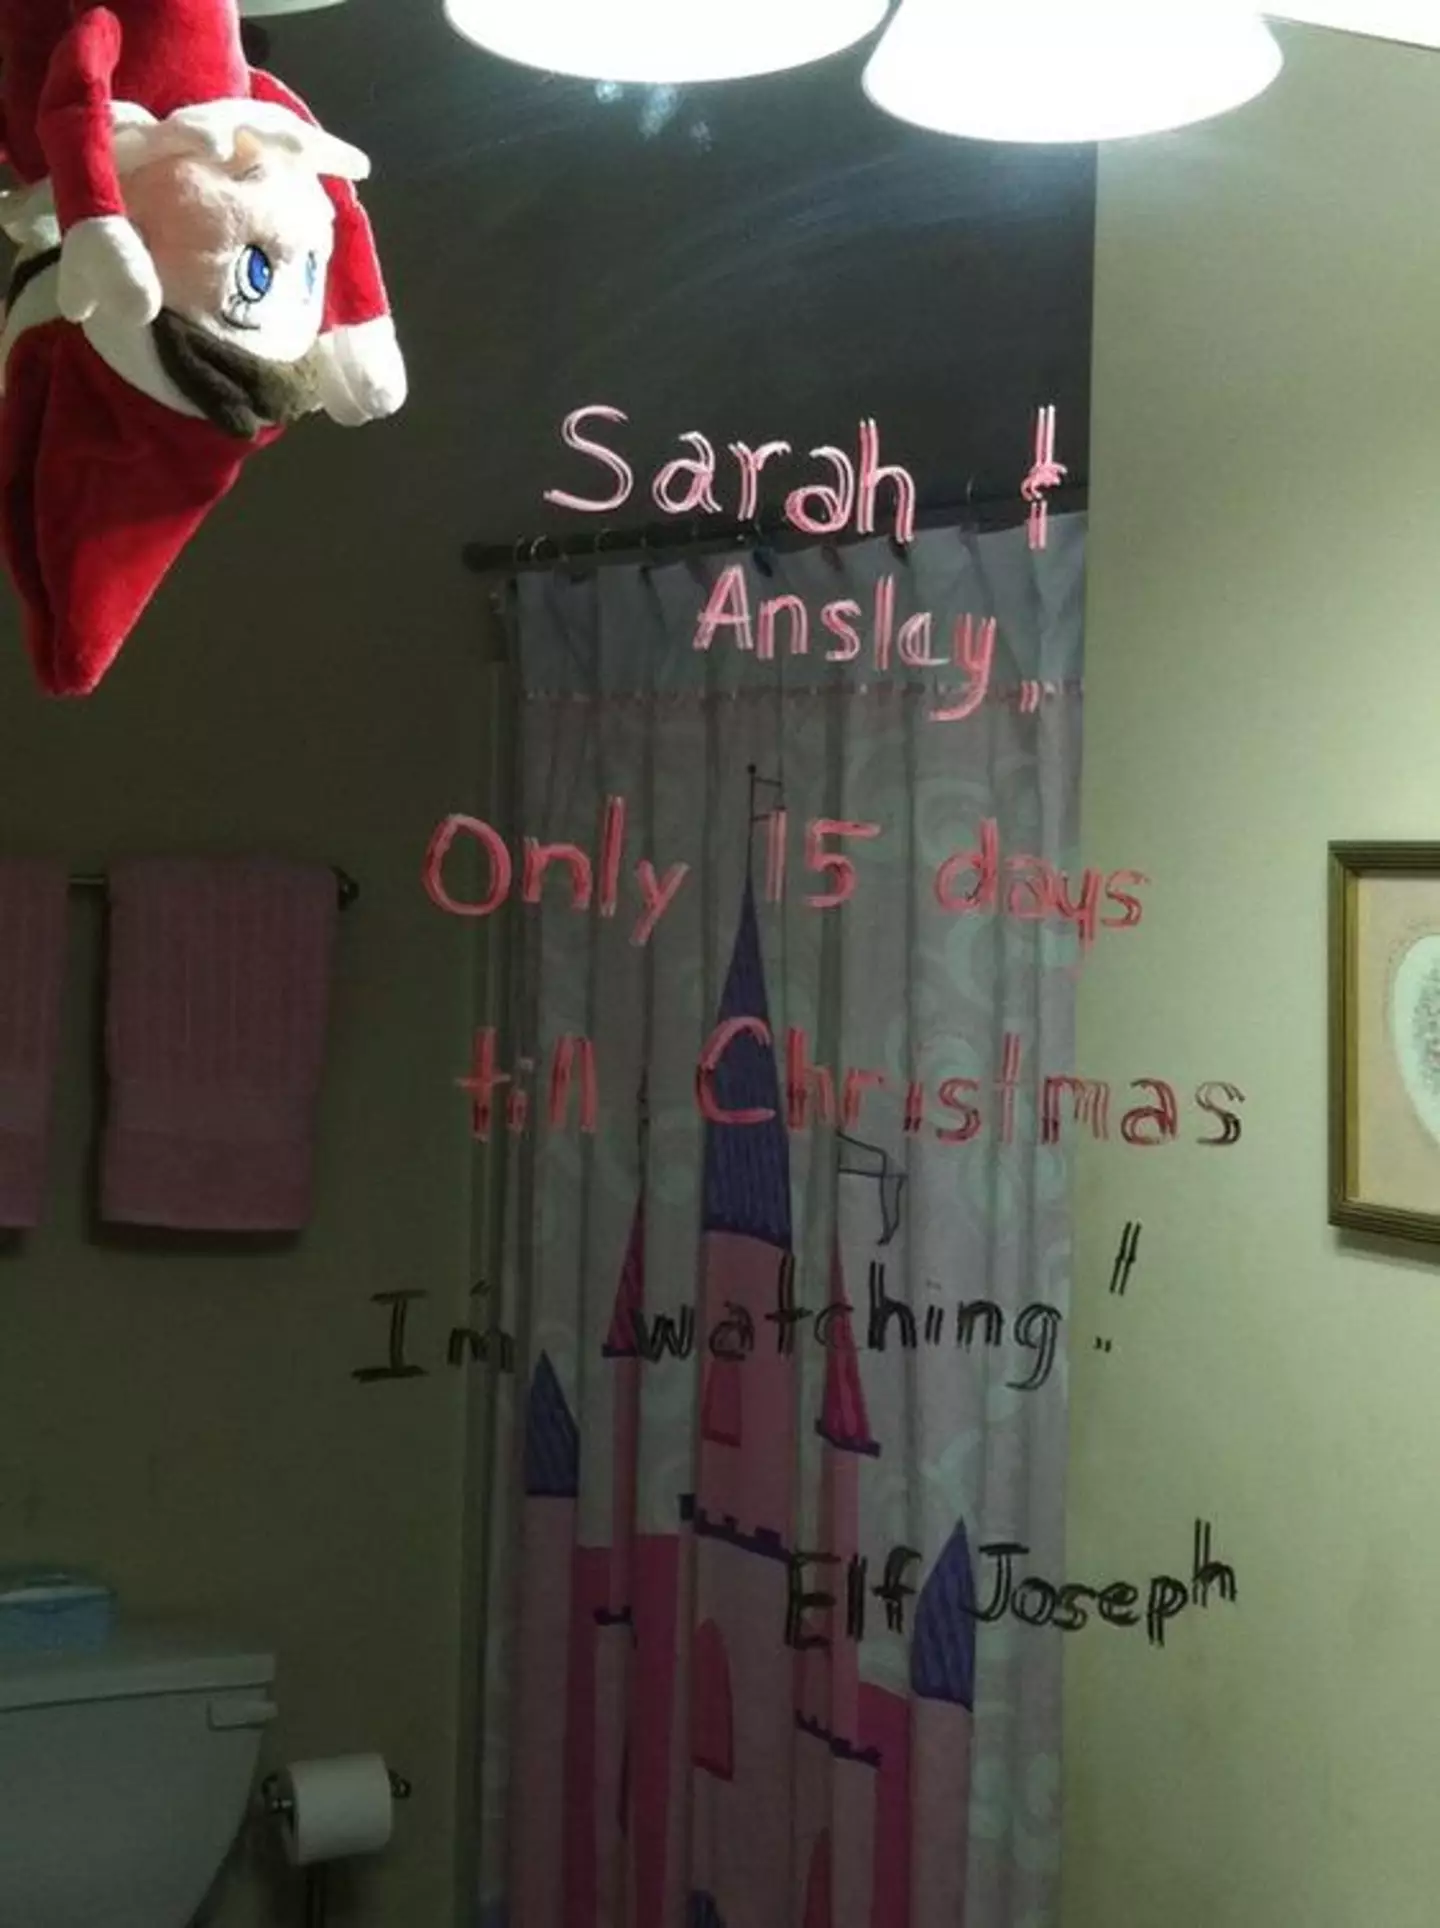 Elf on the shelf mirror message. (